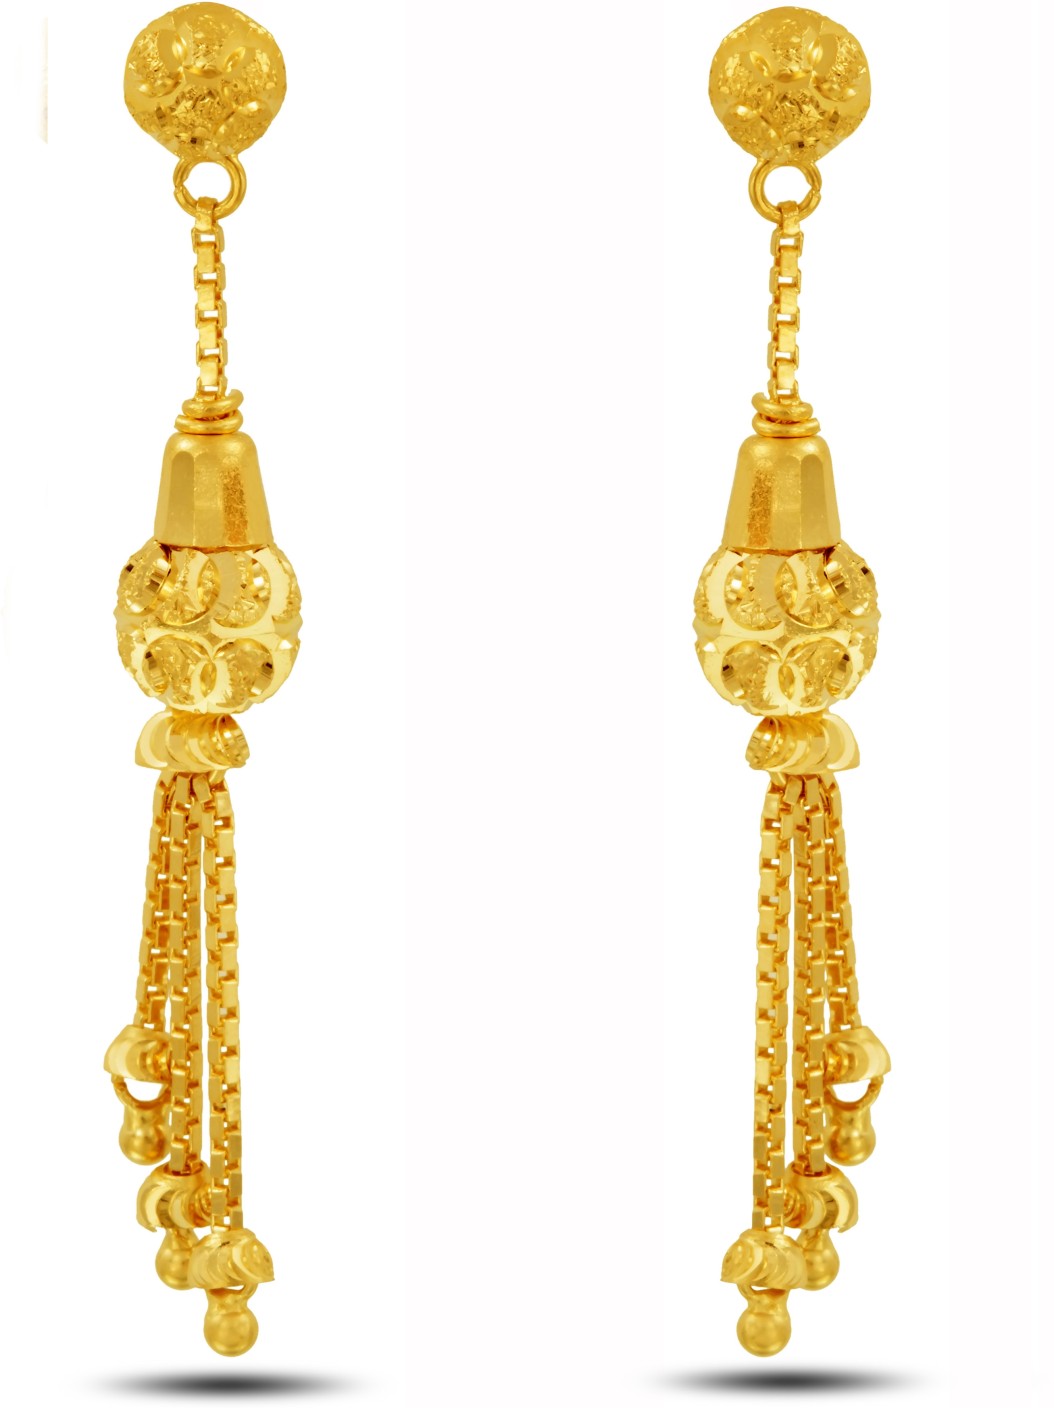 P.N.Gadgil Jewellers Yellow Gold 22kt Drop Earring Price in India - Buy ...